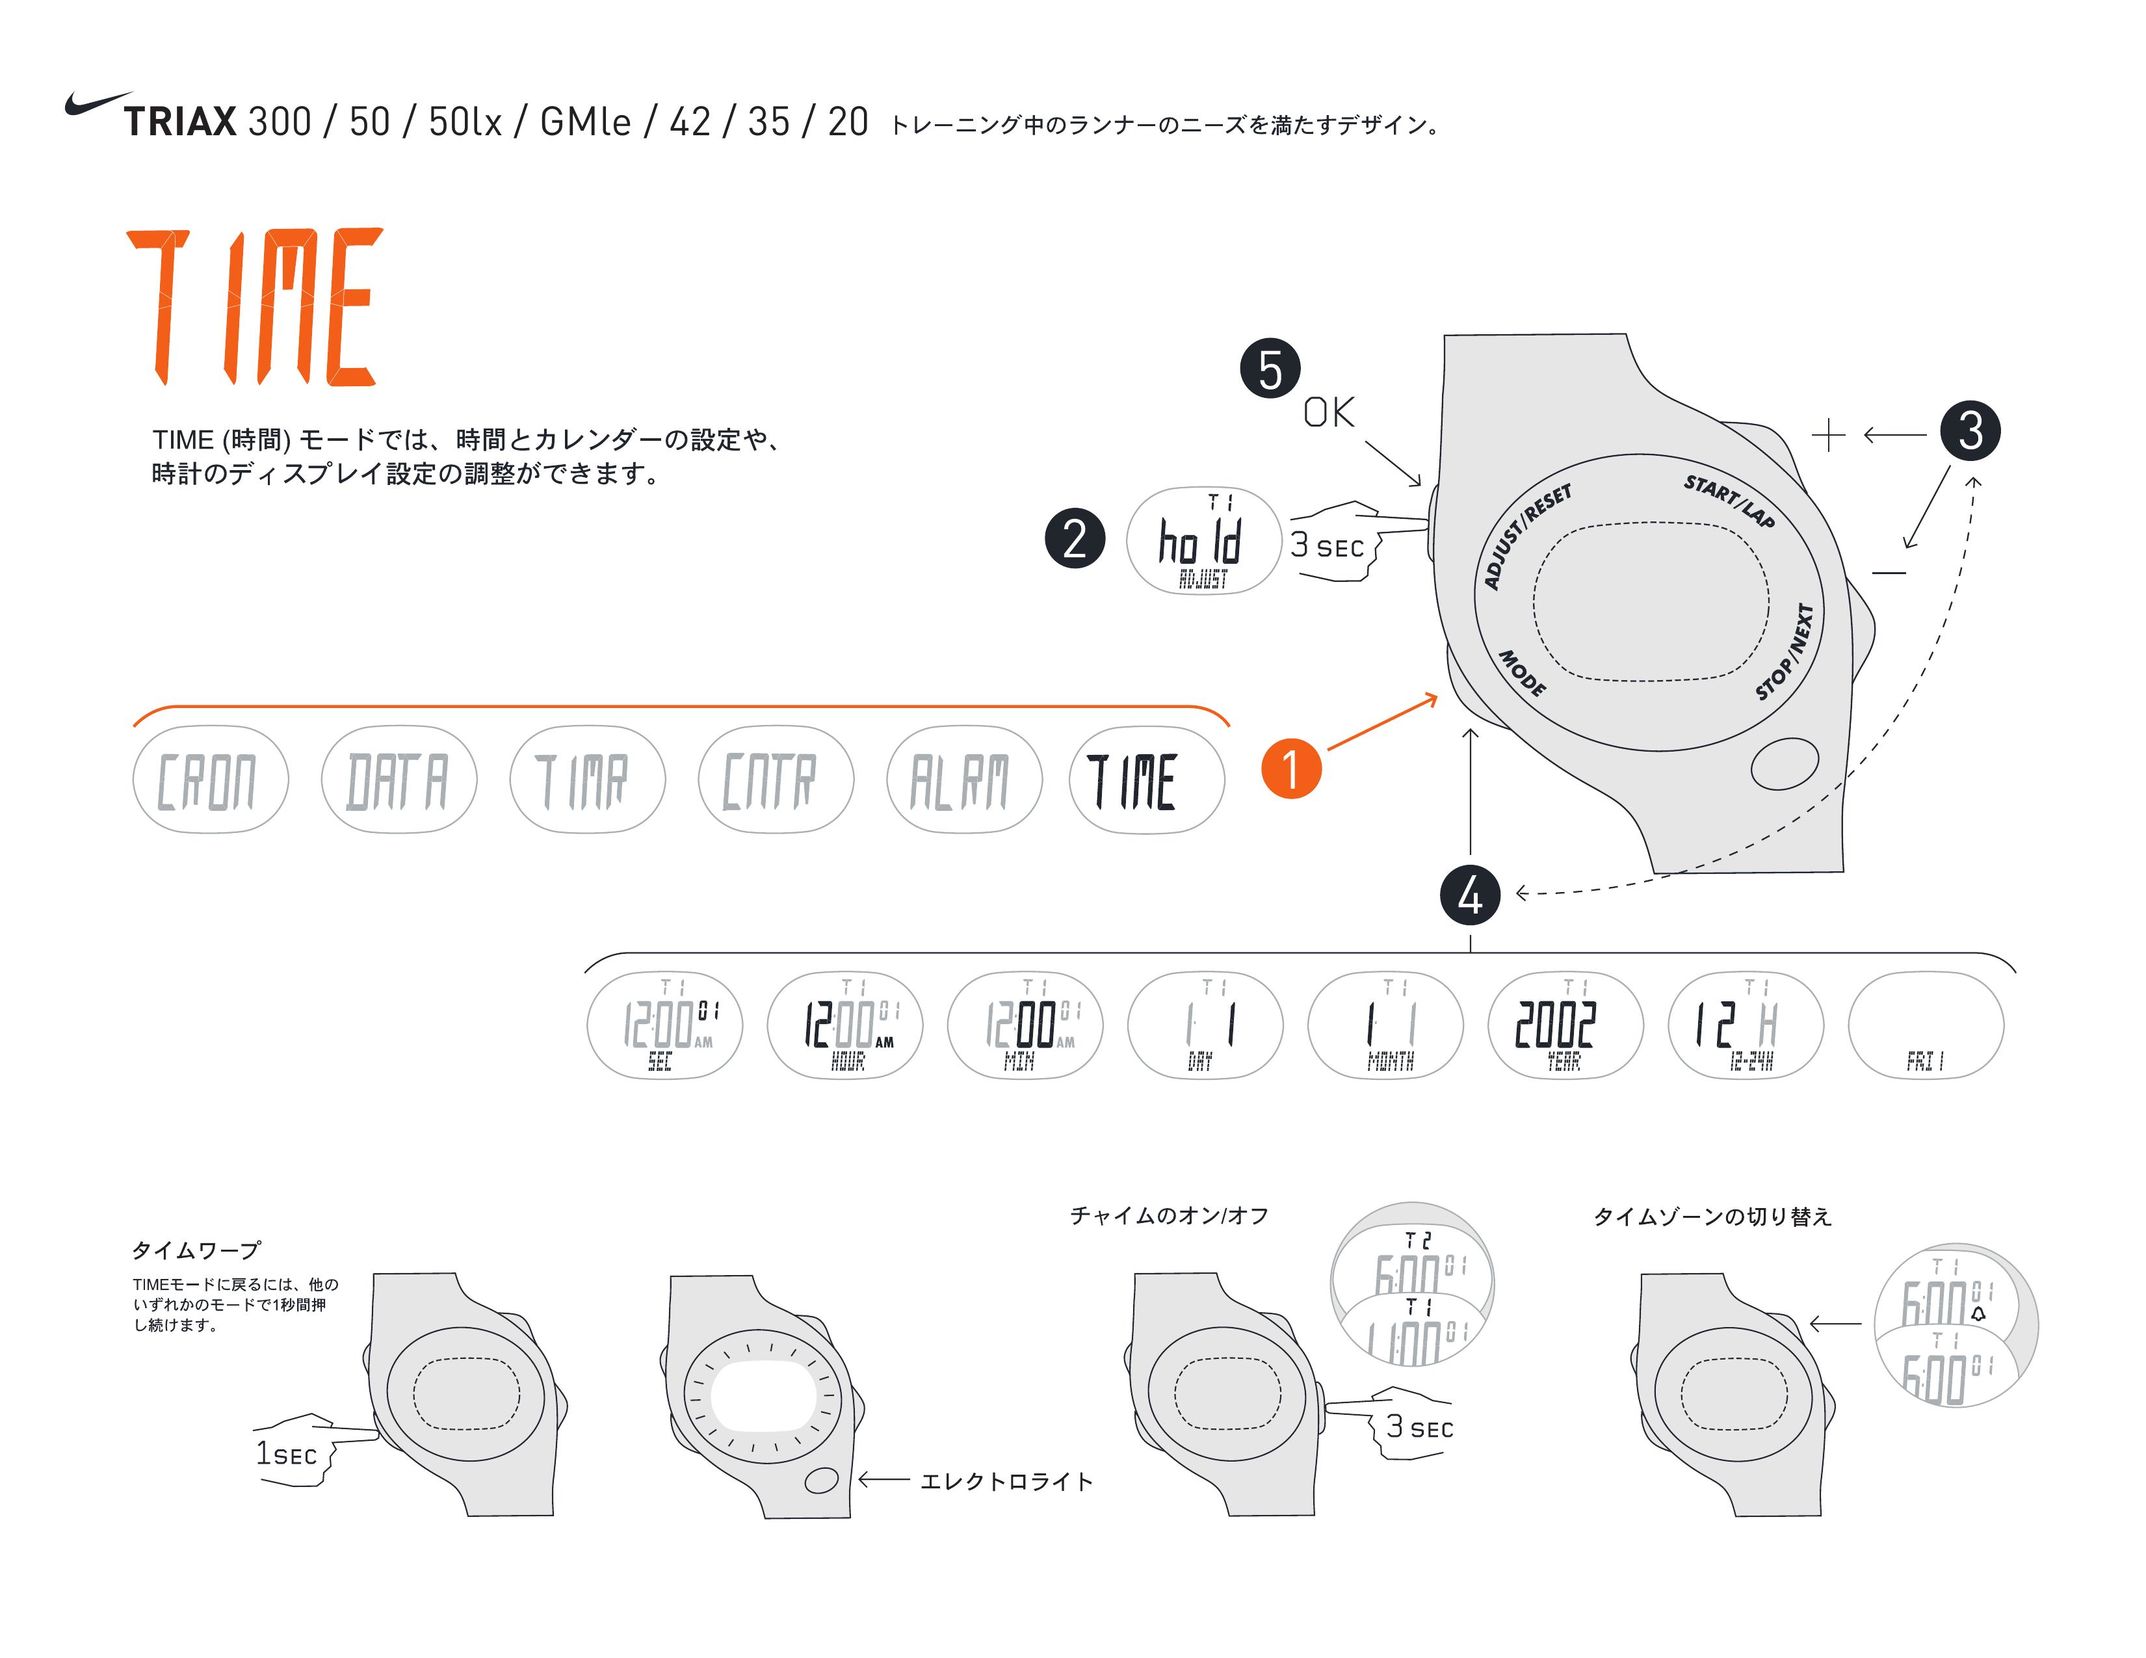 Nike GMle Watch User Manual